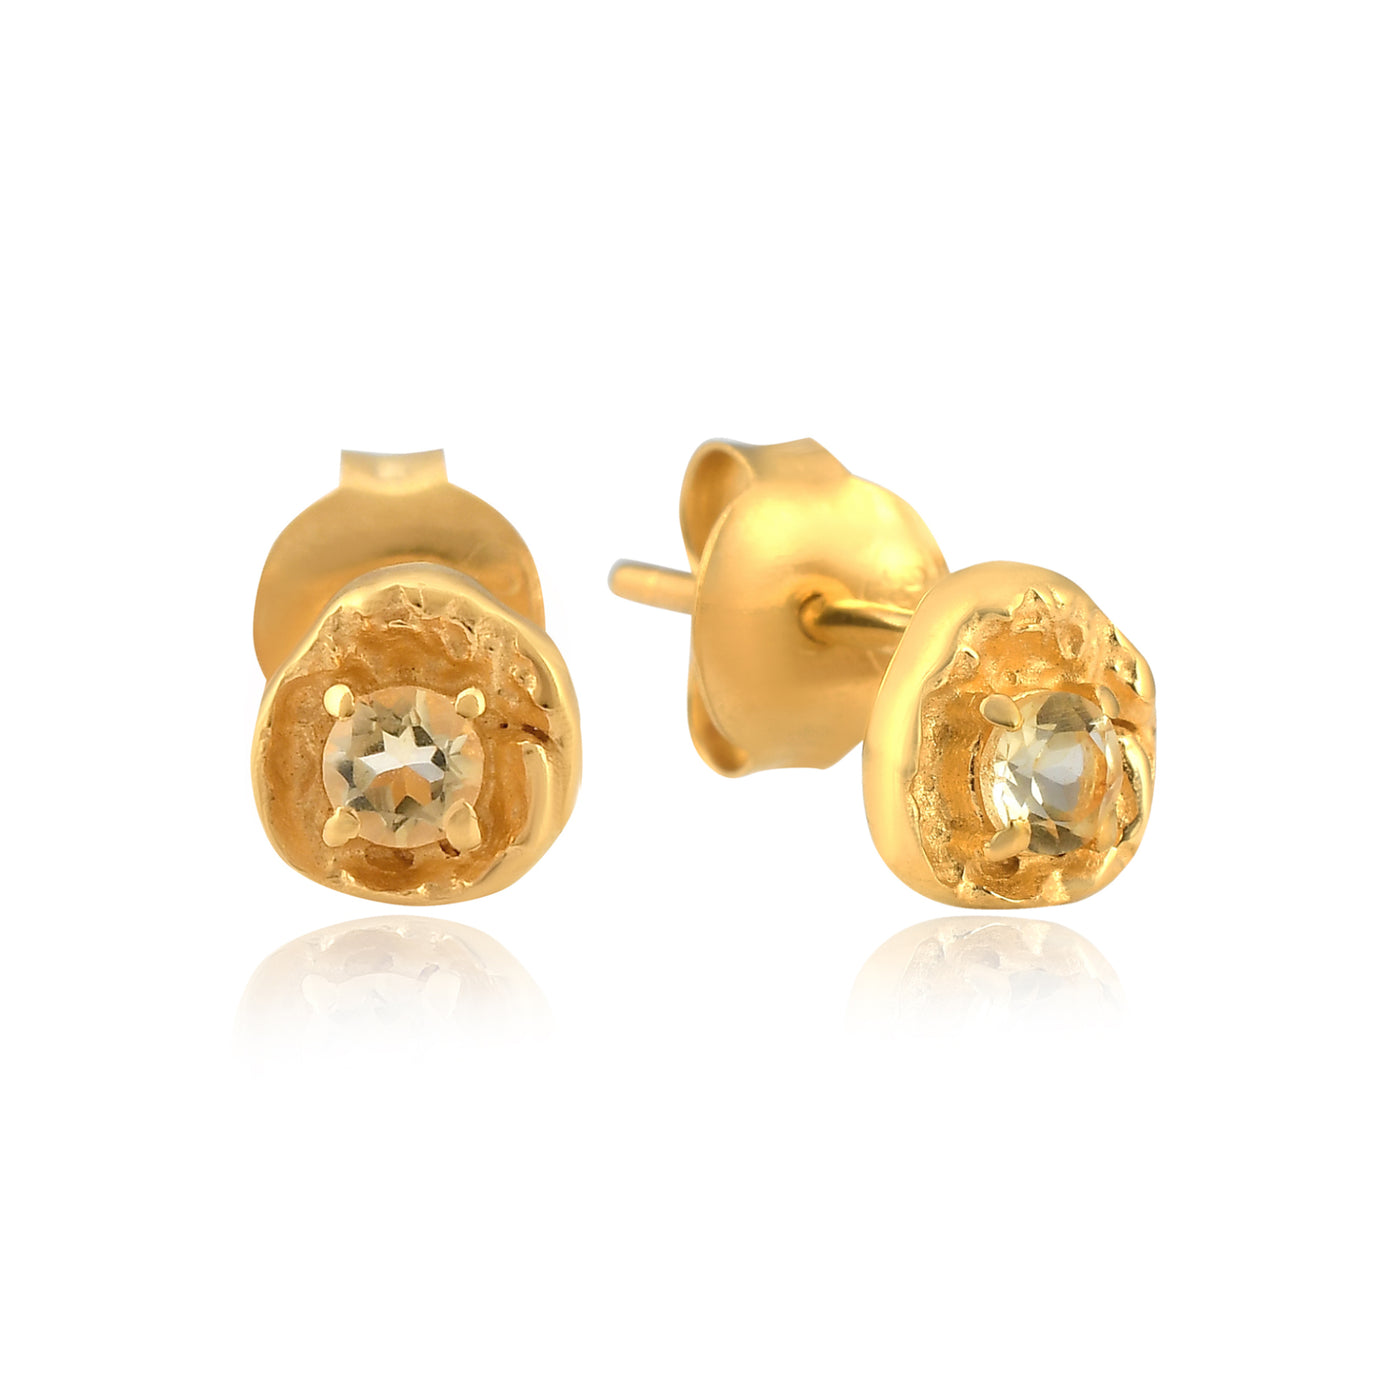 November citrine birthstone organic gold stud earrings, Rani & Co. jewellery uk